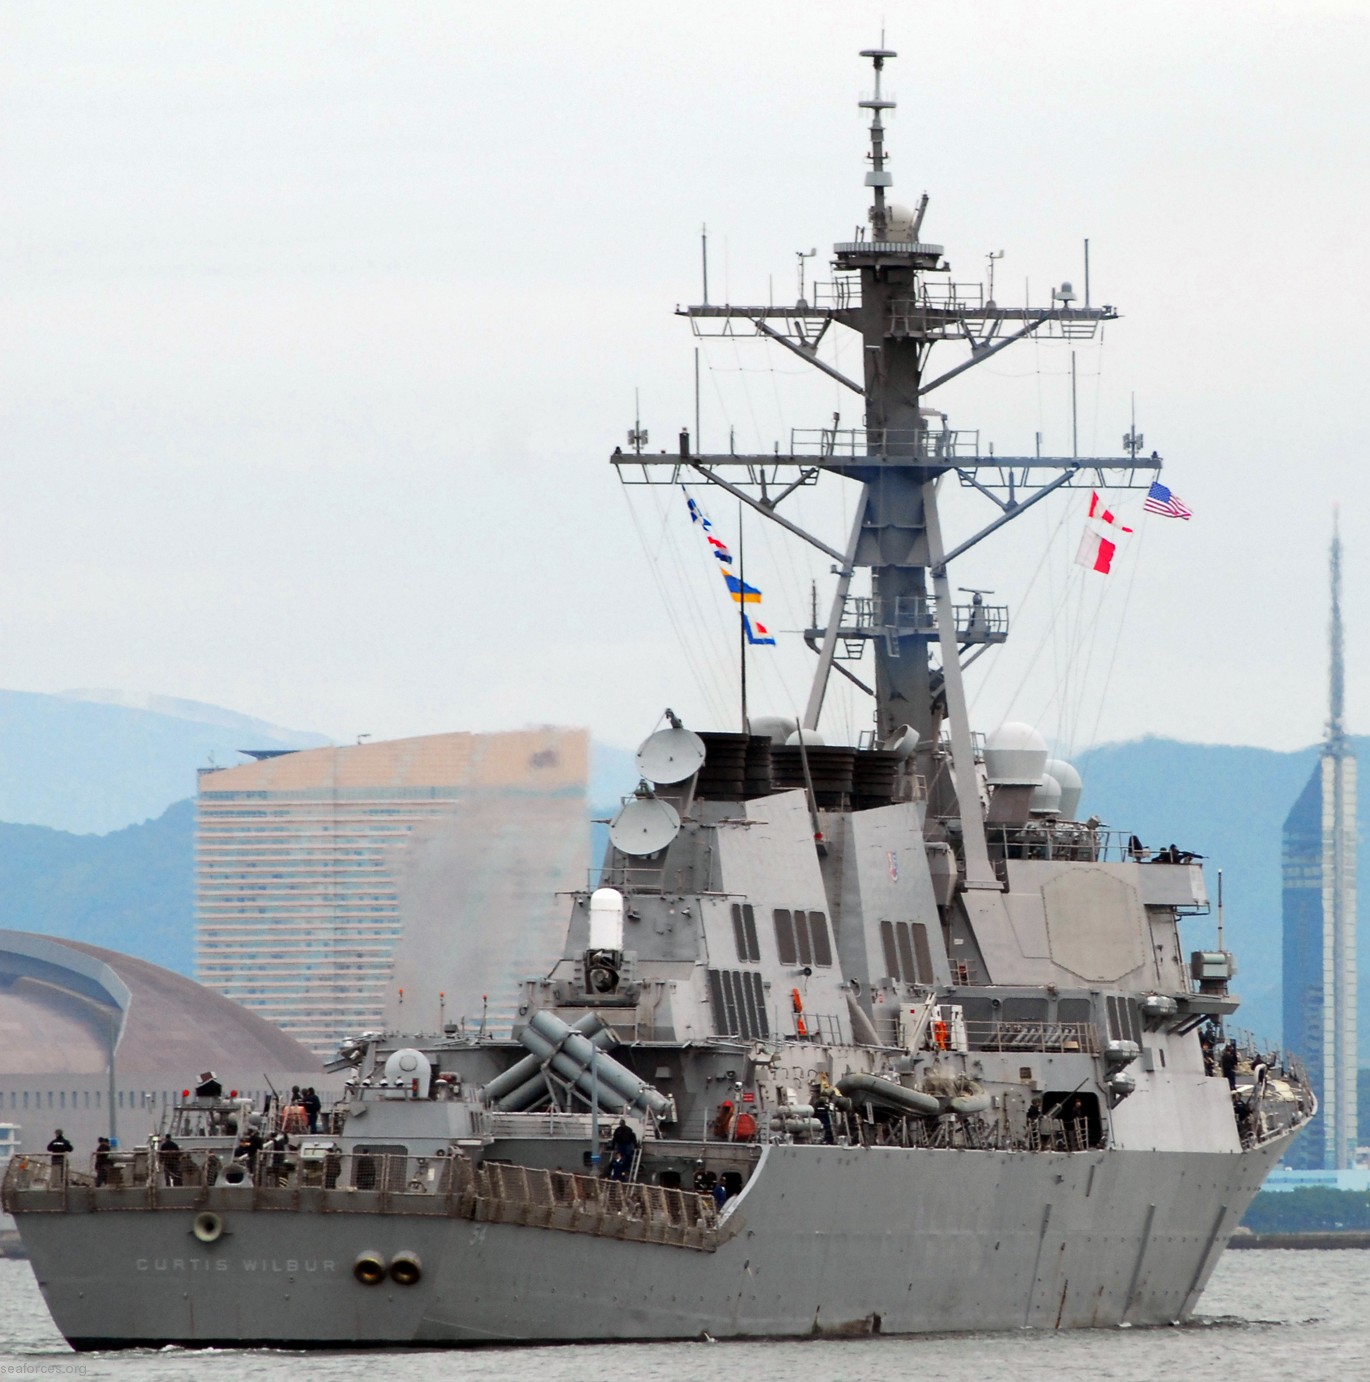 ddg-54 uss curtis wilbur destroyer us navy 53 fukuoka japan